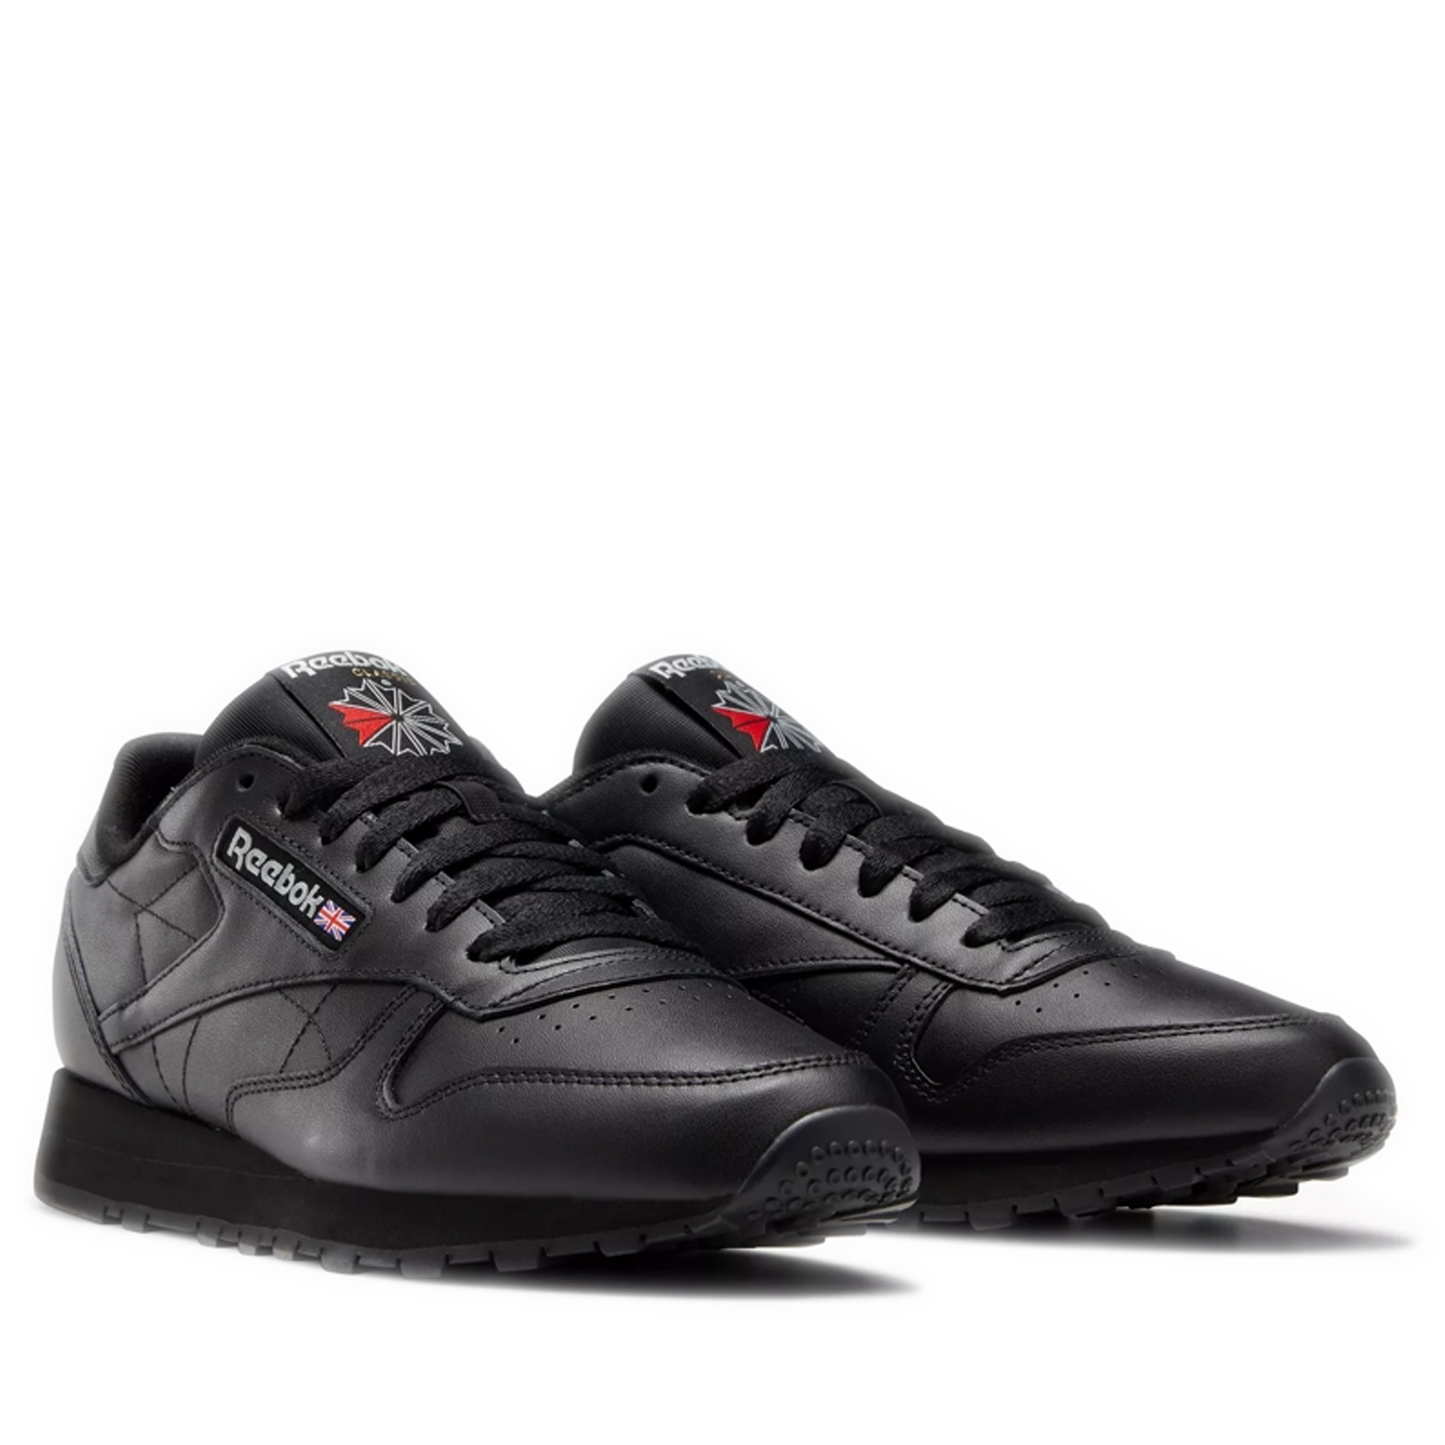 Classic Leather Shoes - Core Black / Pure Grey 5 / Reebok Rubber Gum-03